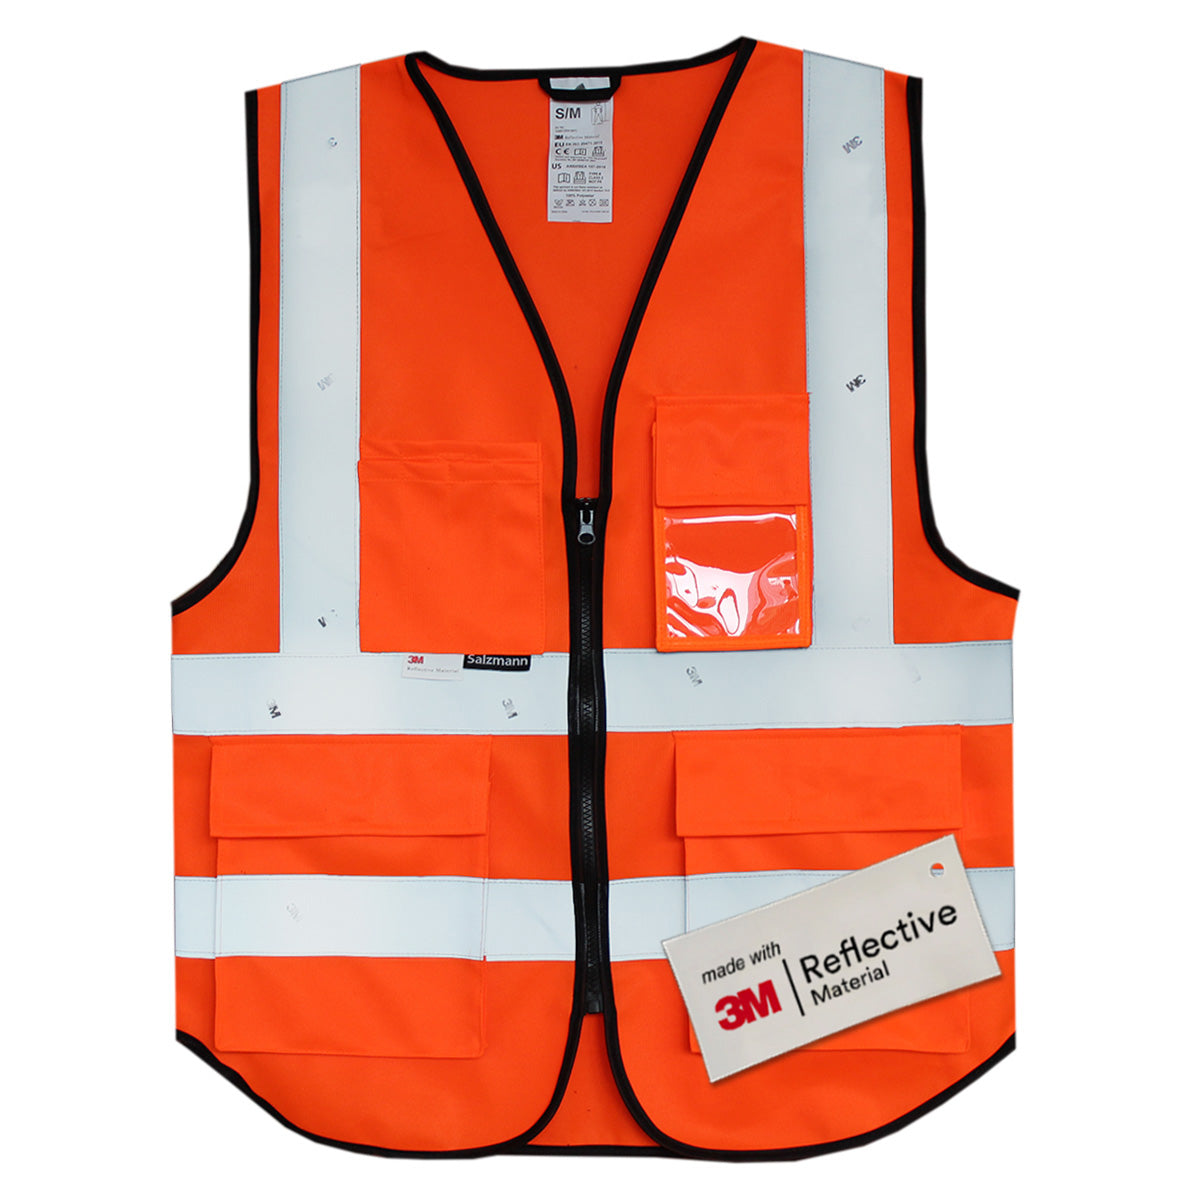 Close up of orange security vest.  